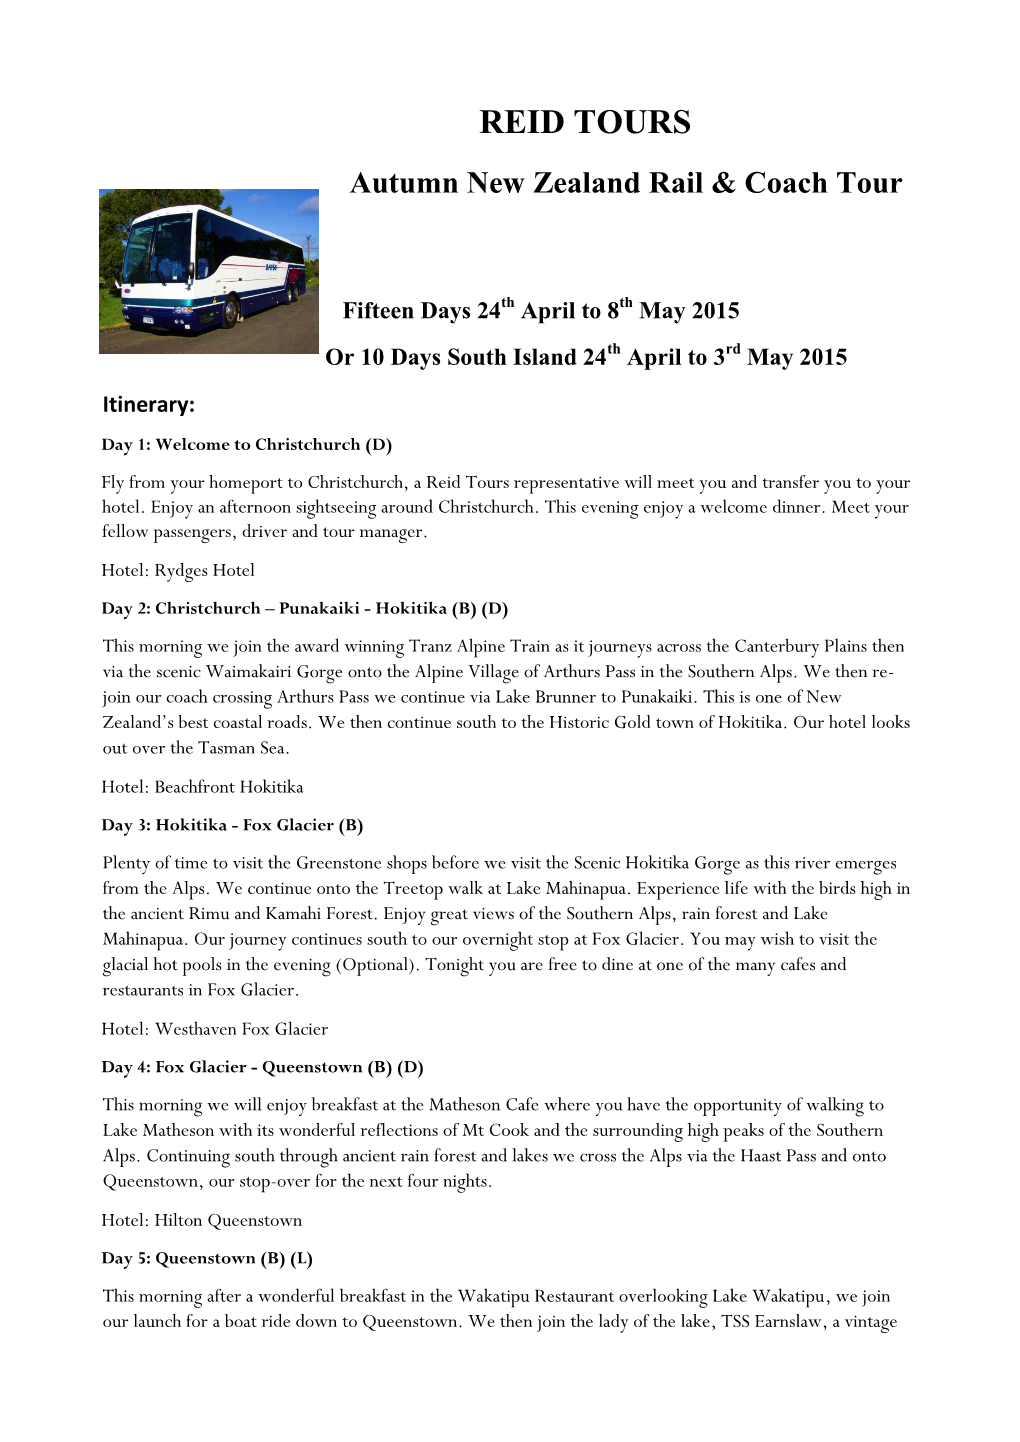 REID TOURS Autumn New Zealand Rail & Coach Tour